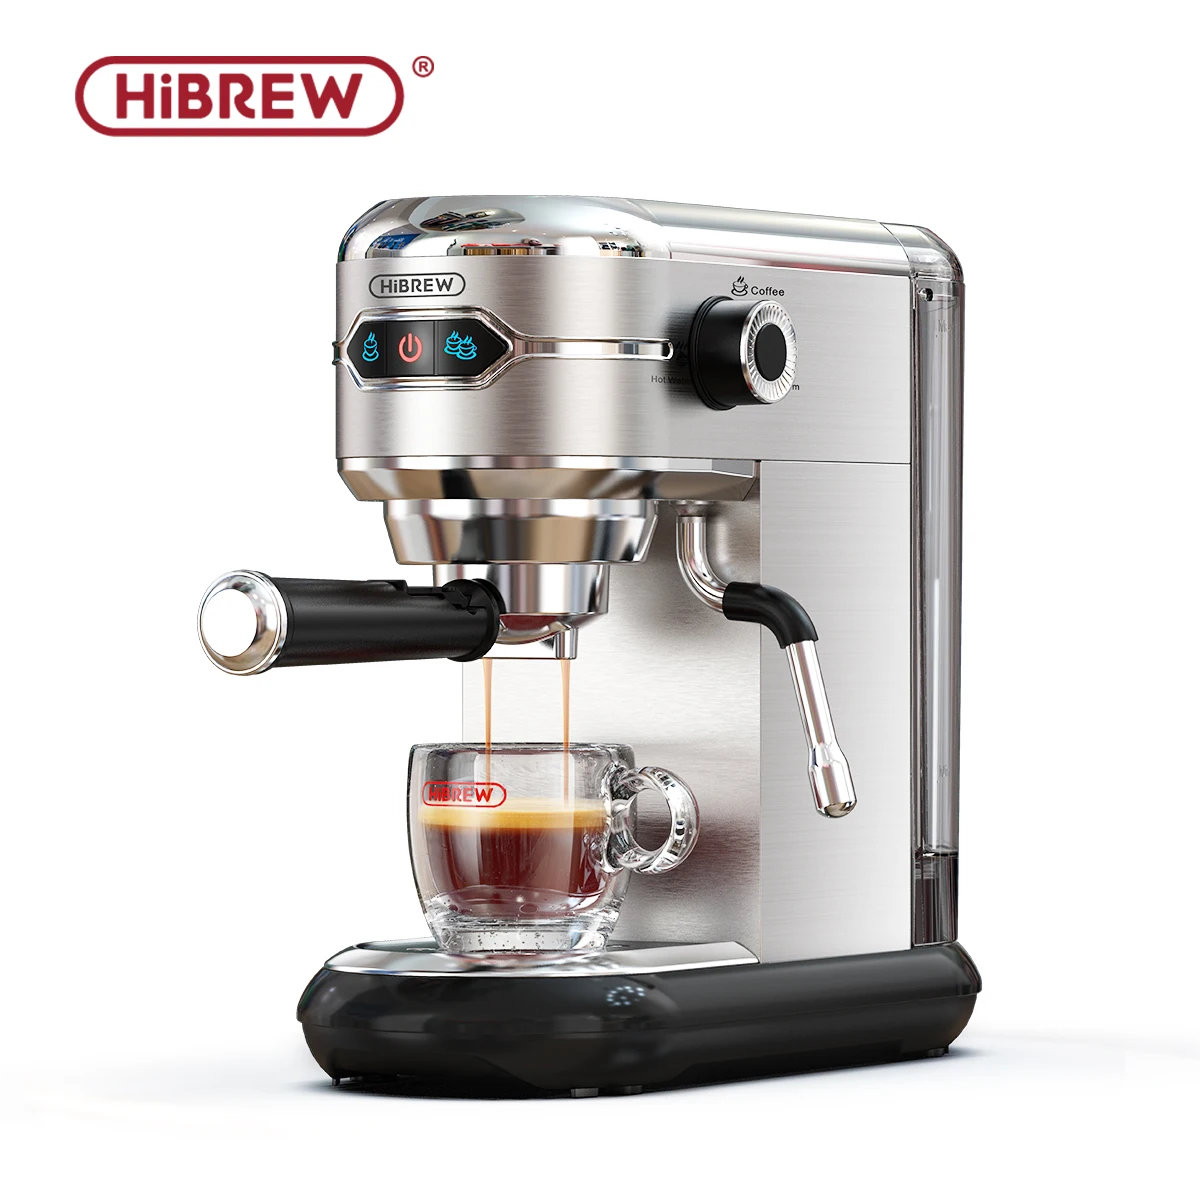 HiBREW 에스프레소 머신 카푸치노 라떼 이녹스용 컴팩트 커피 메이커, 반자동 슈퍼 슬림 ESE POD 및 파우더 H11, 19 바